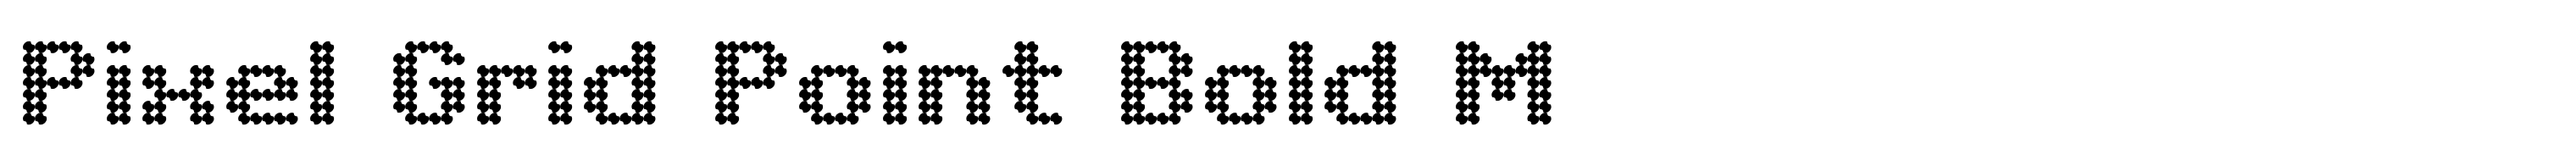 Pixel Grid Point Bold M